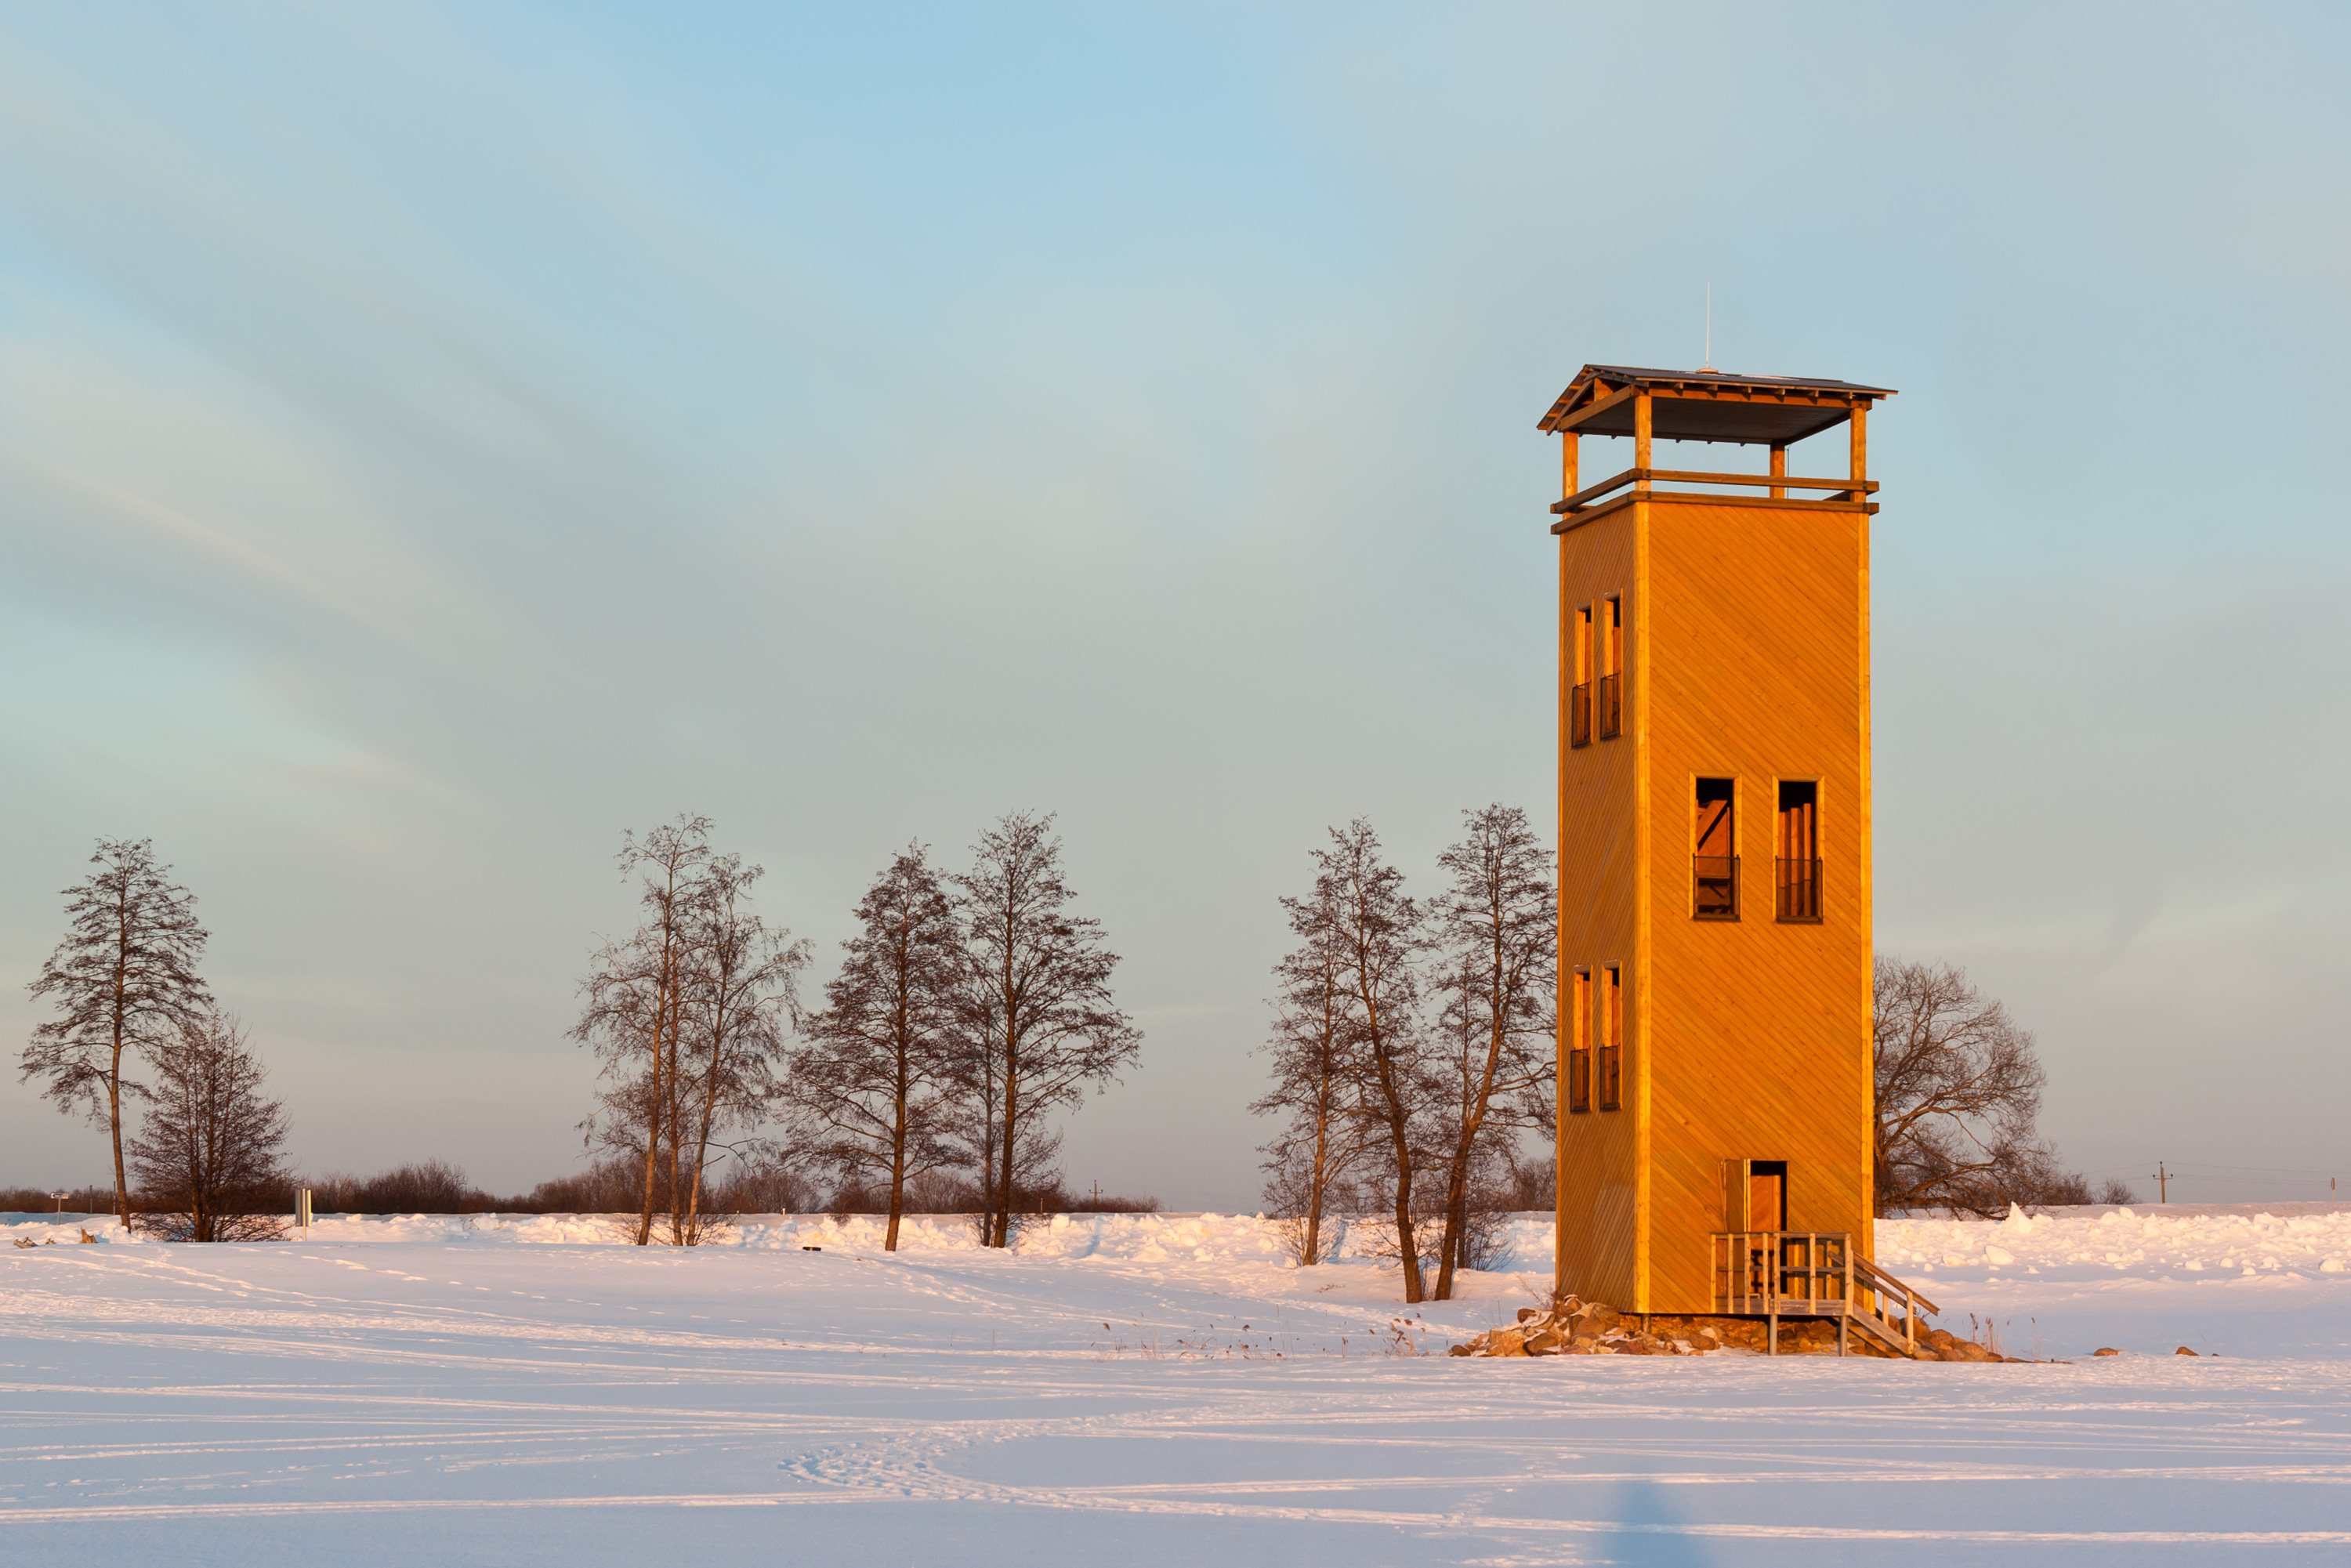 Beobachtungsturm Jõesuu am estnischee See Võrtsjärv - Quelle: WikiCommons